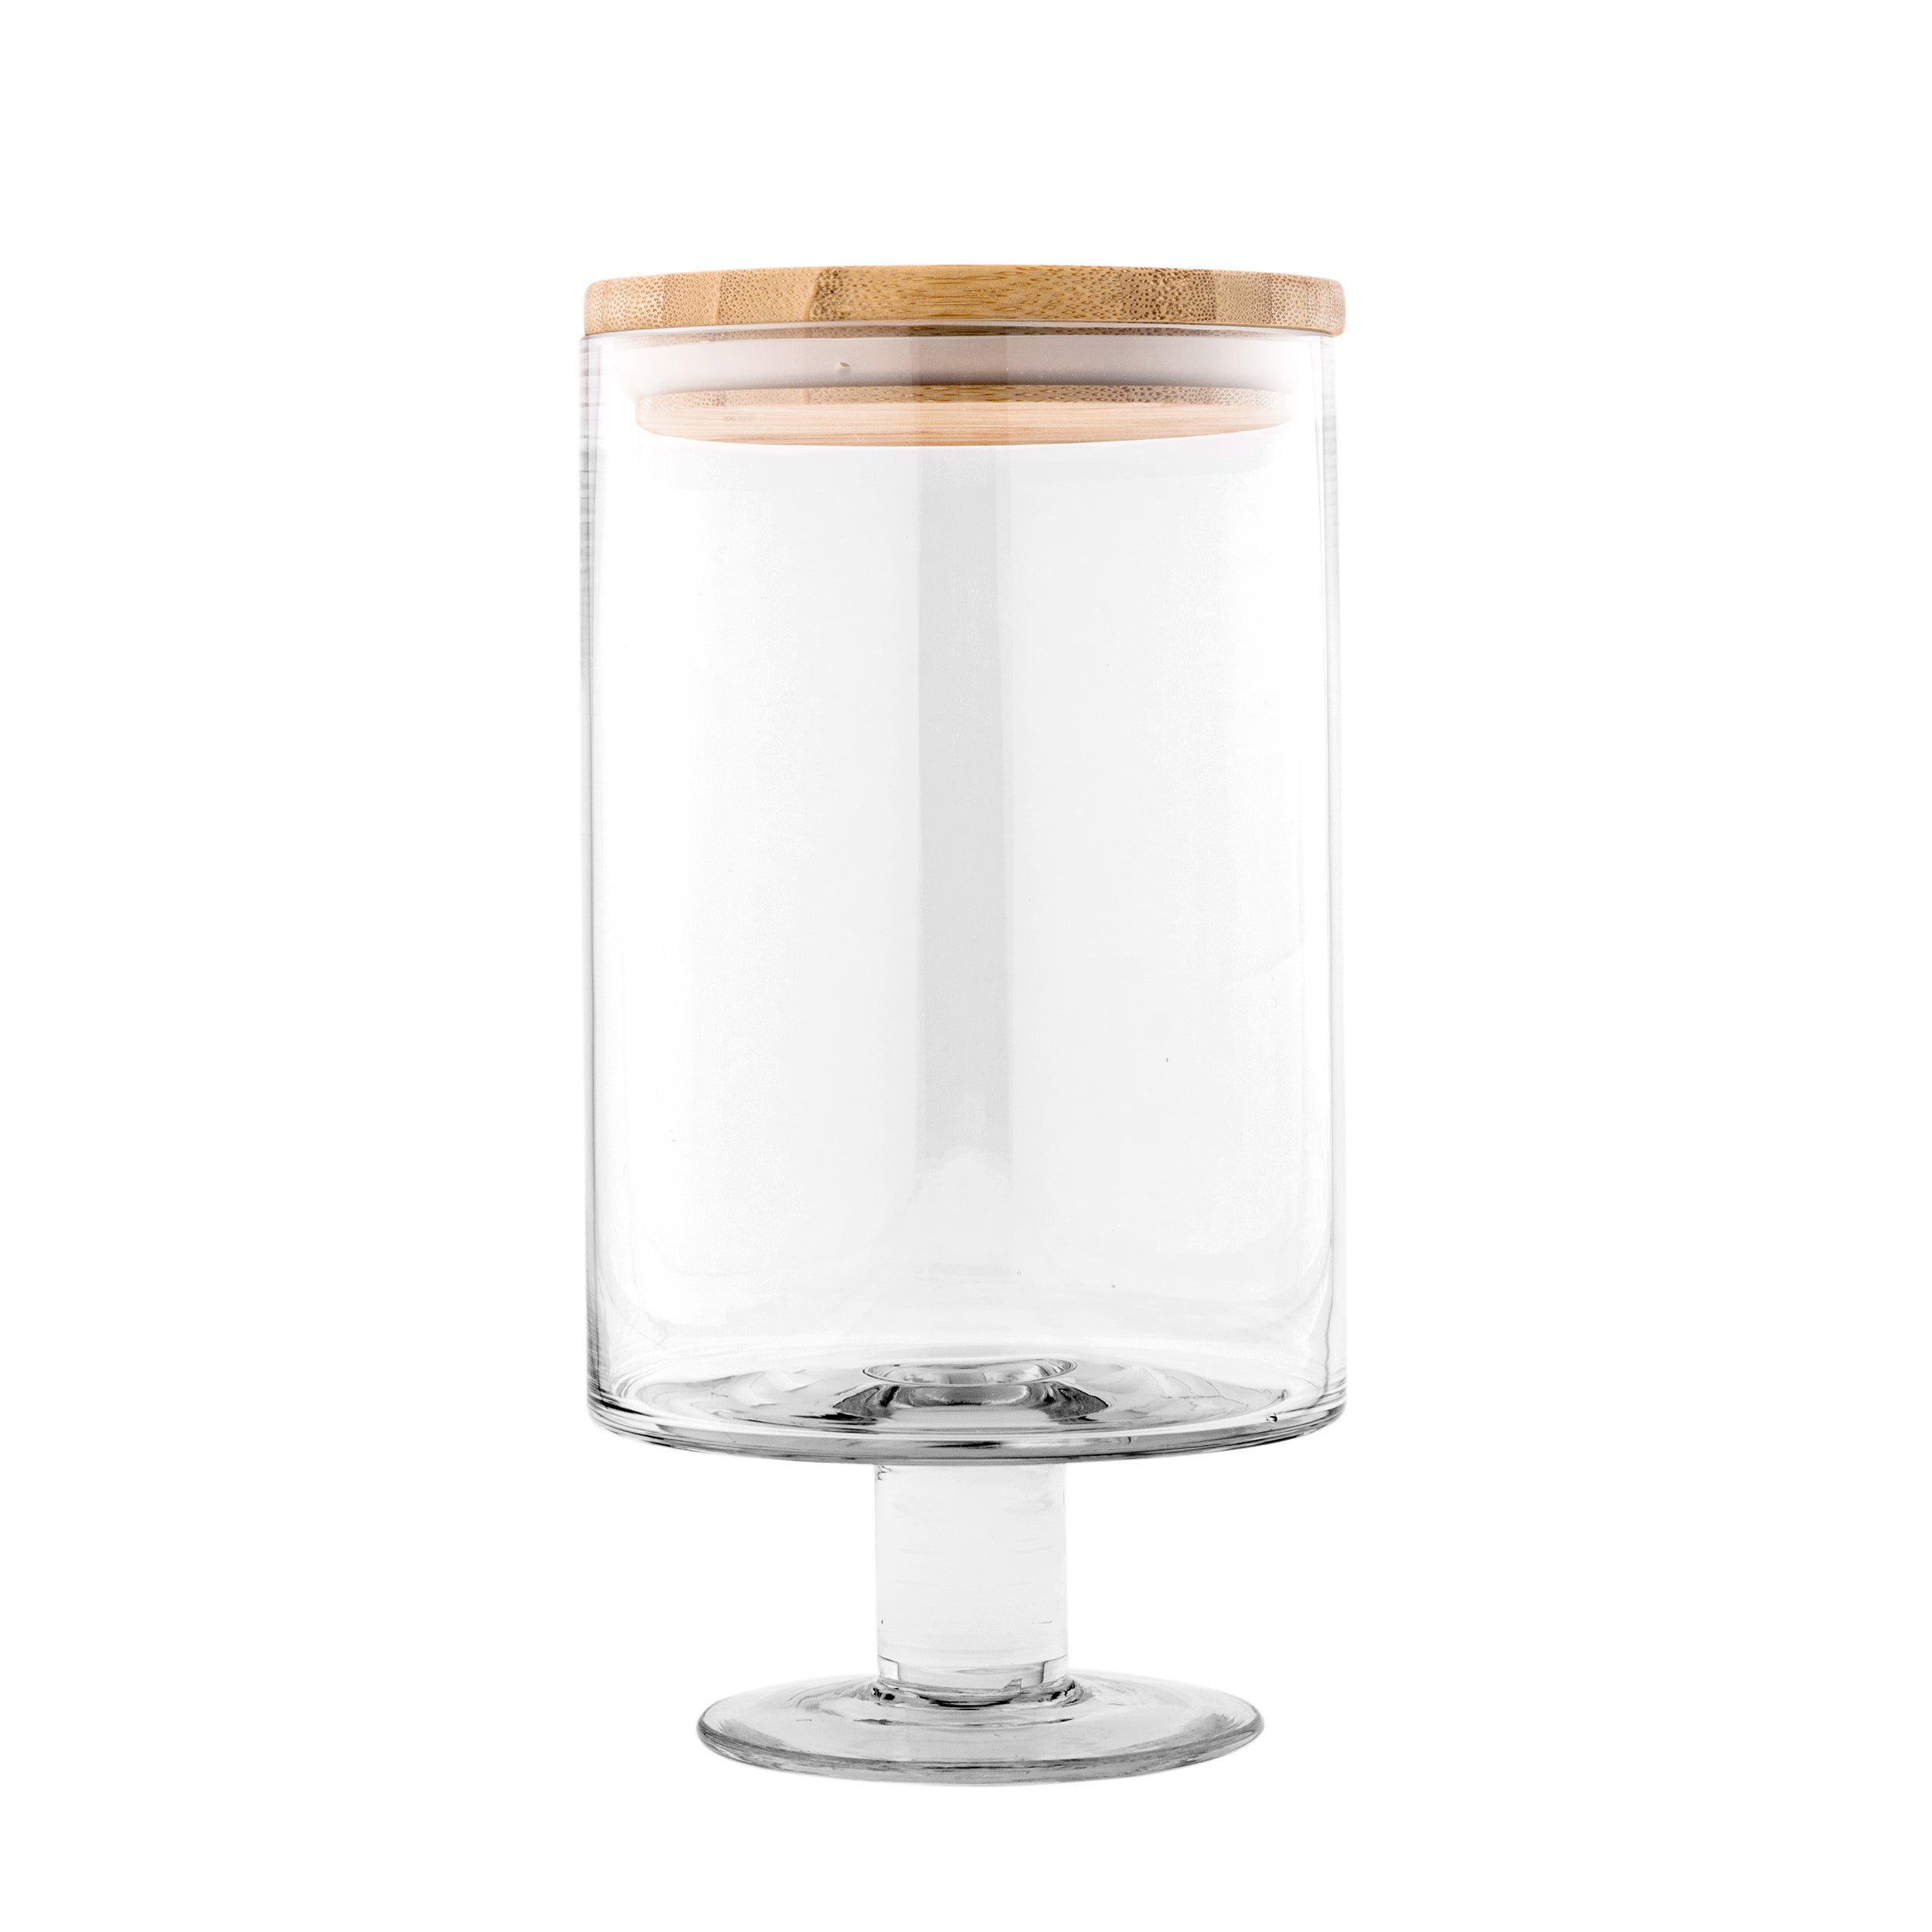 Hammered Glass Jar with Bamboo Lid - Kayla LeBaron Designs